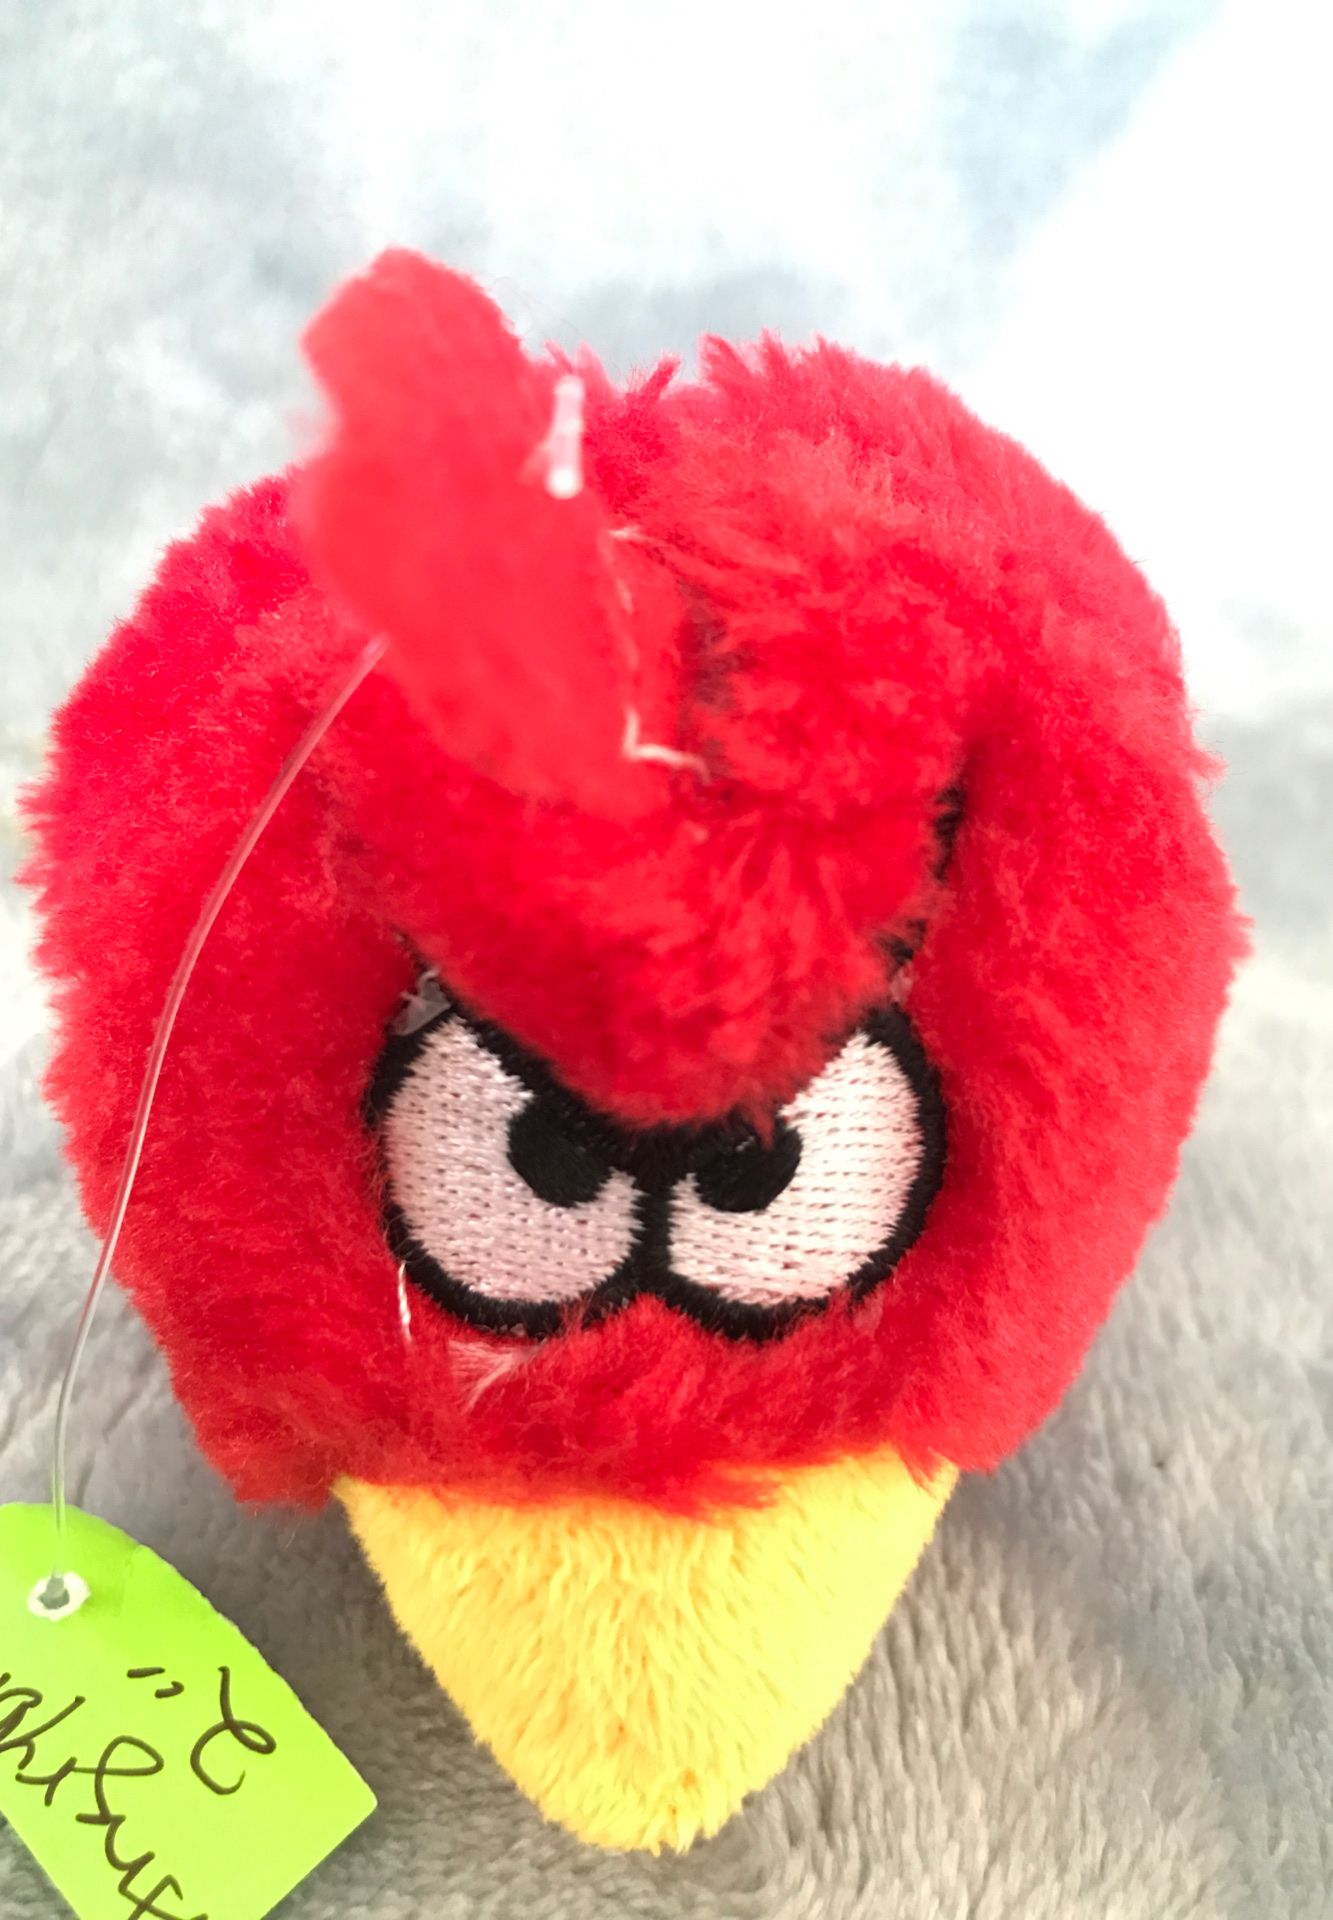 2” angry Birds stuffed animal$1